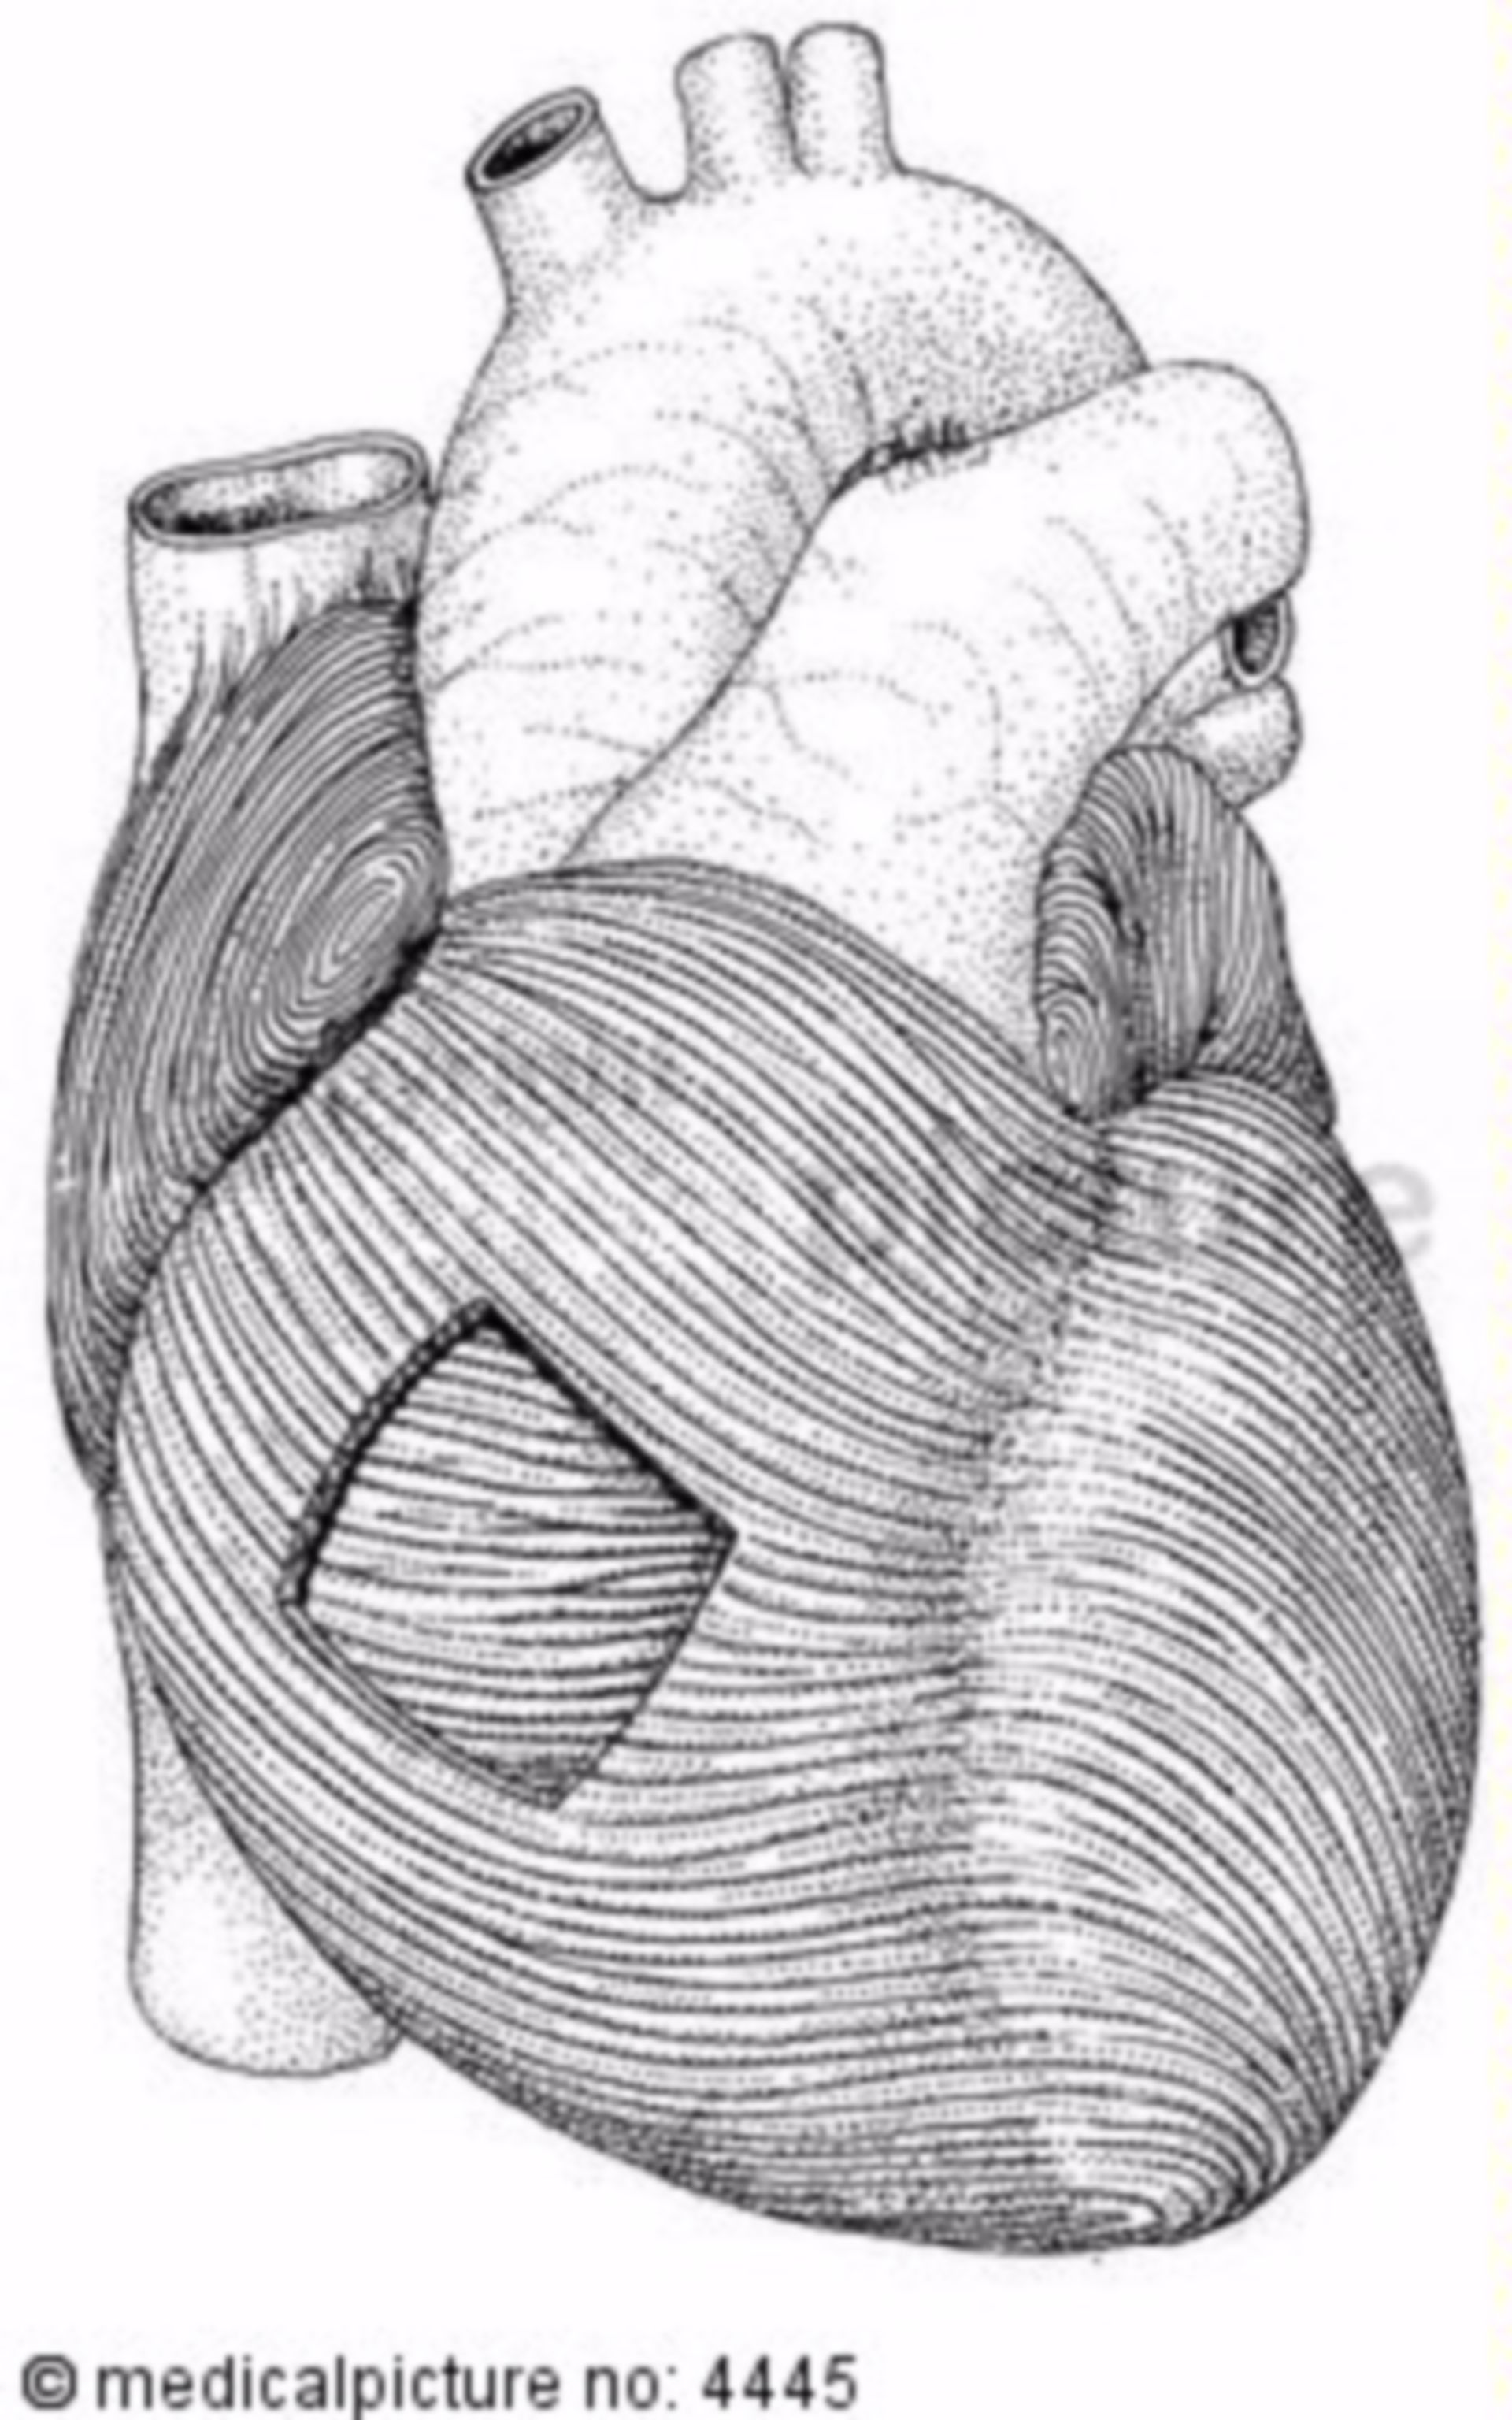 Heart, anatomical model